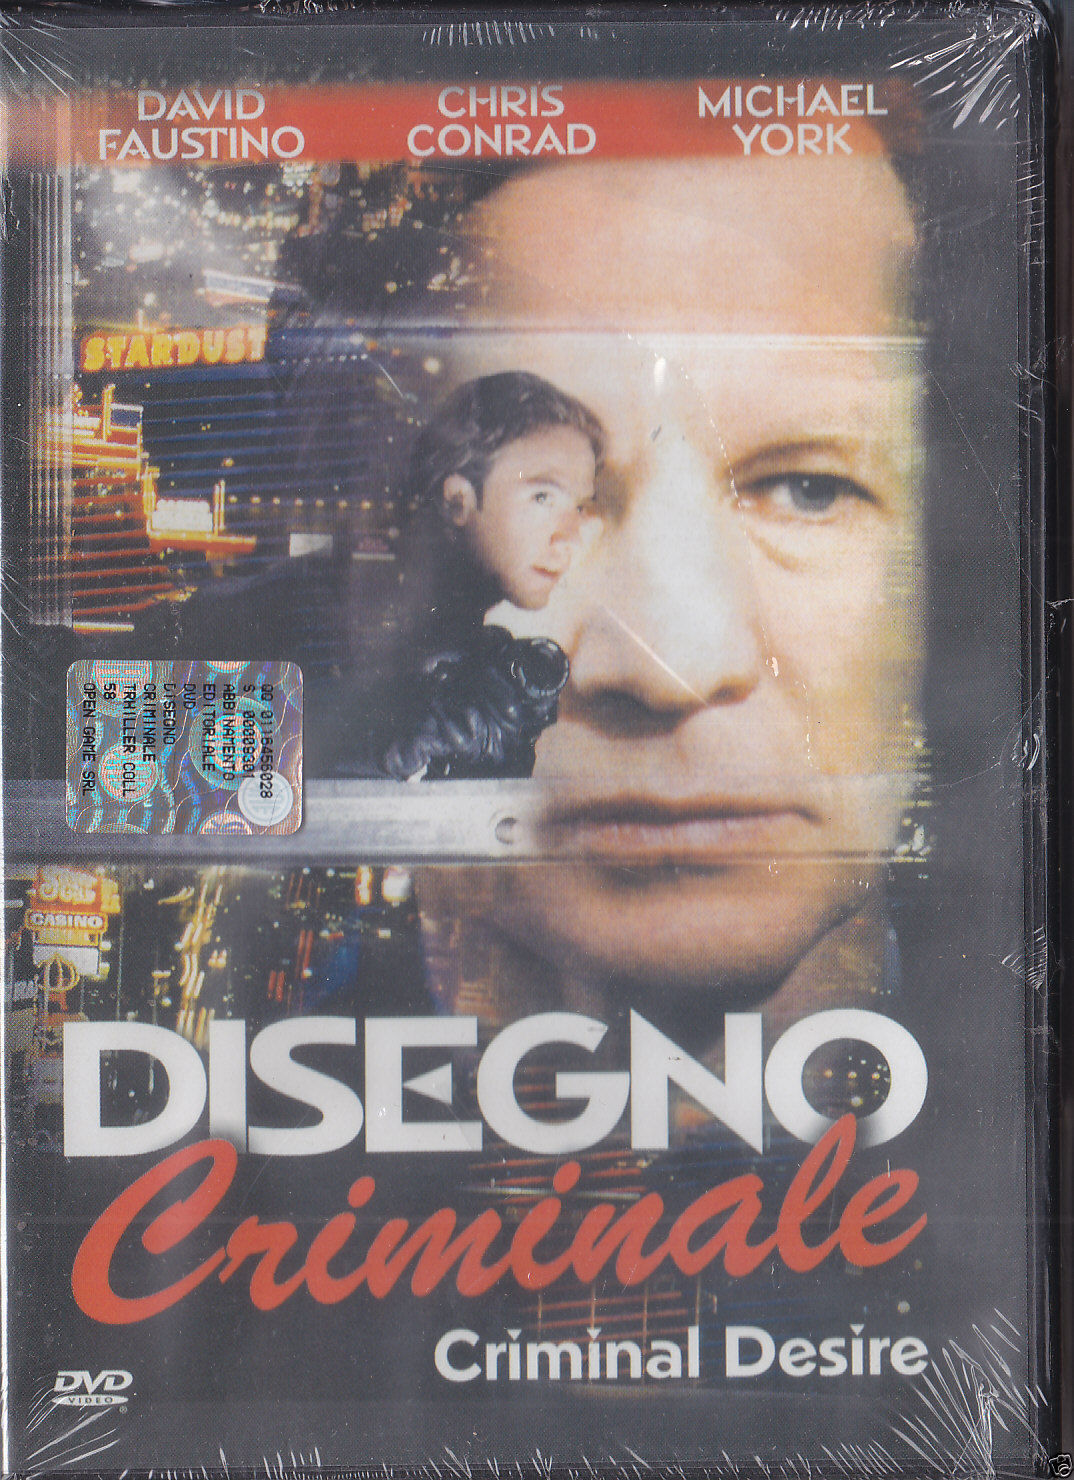 DISEGNO CRIMINALE - MARK FREED - OPEN GAME - 1998  - DVD - M dvd usato